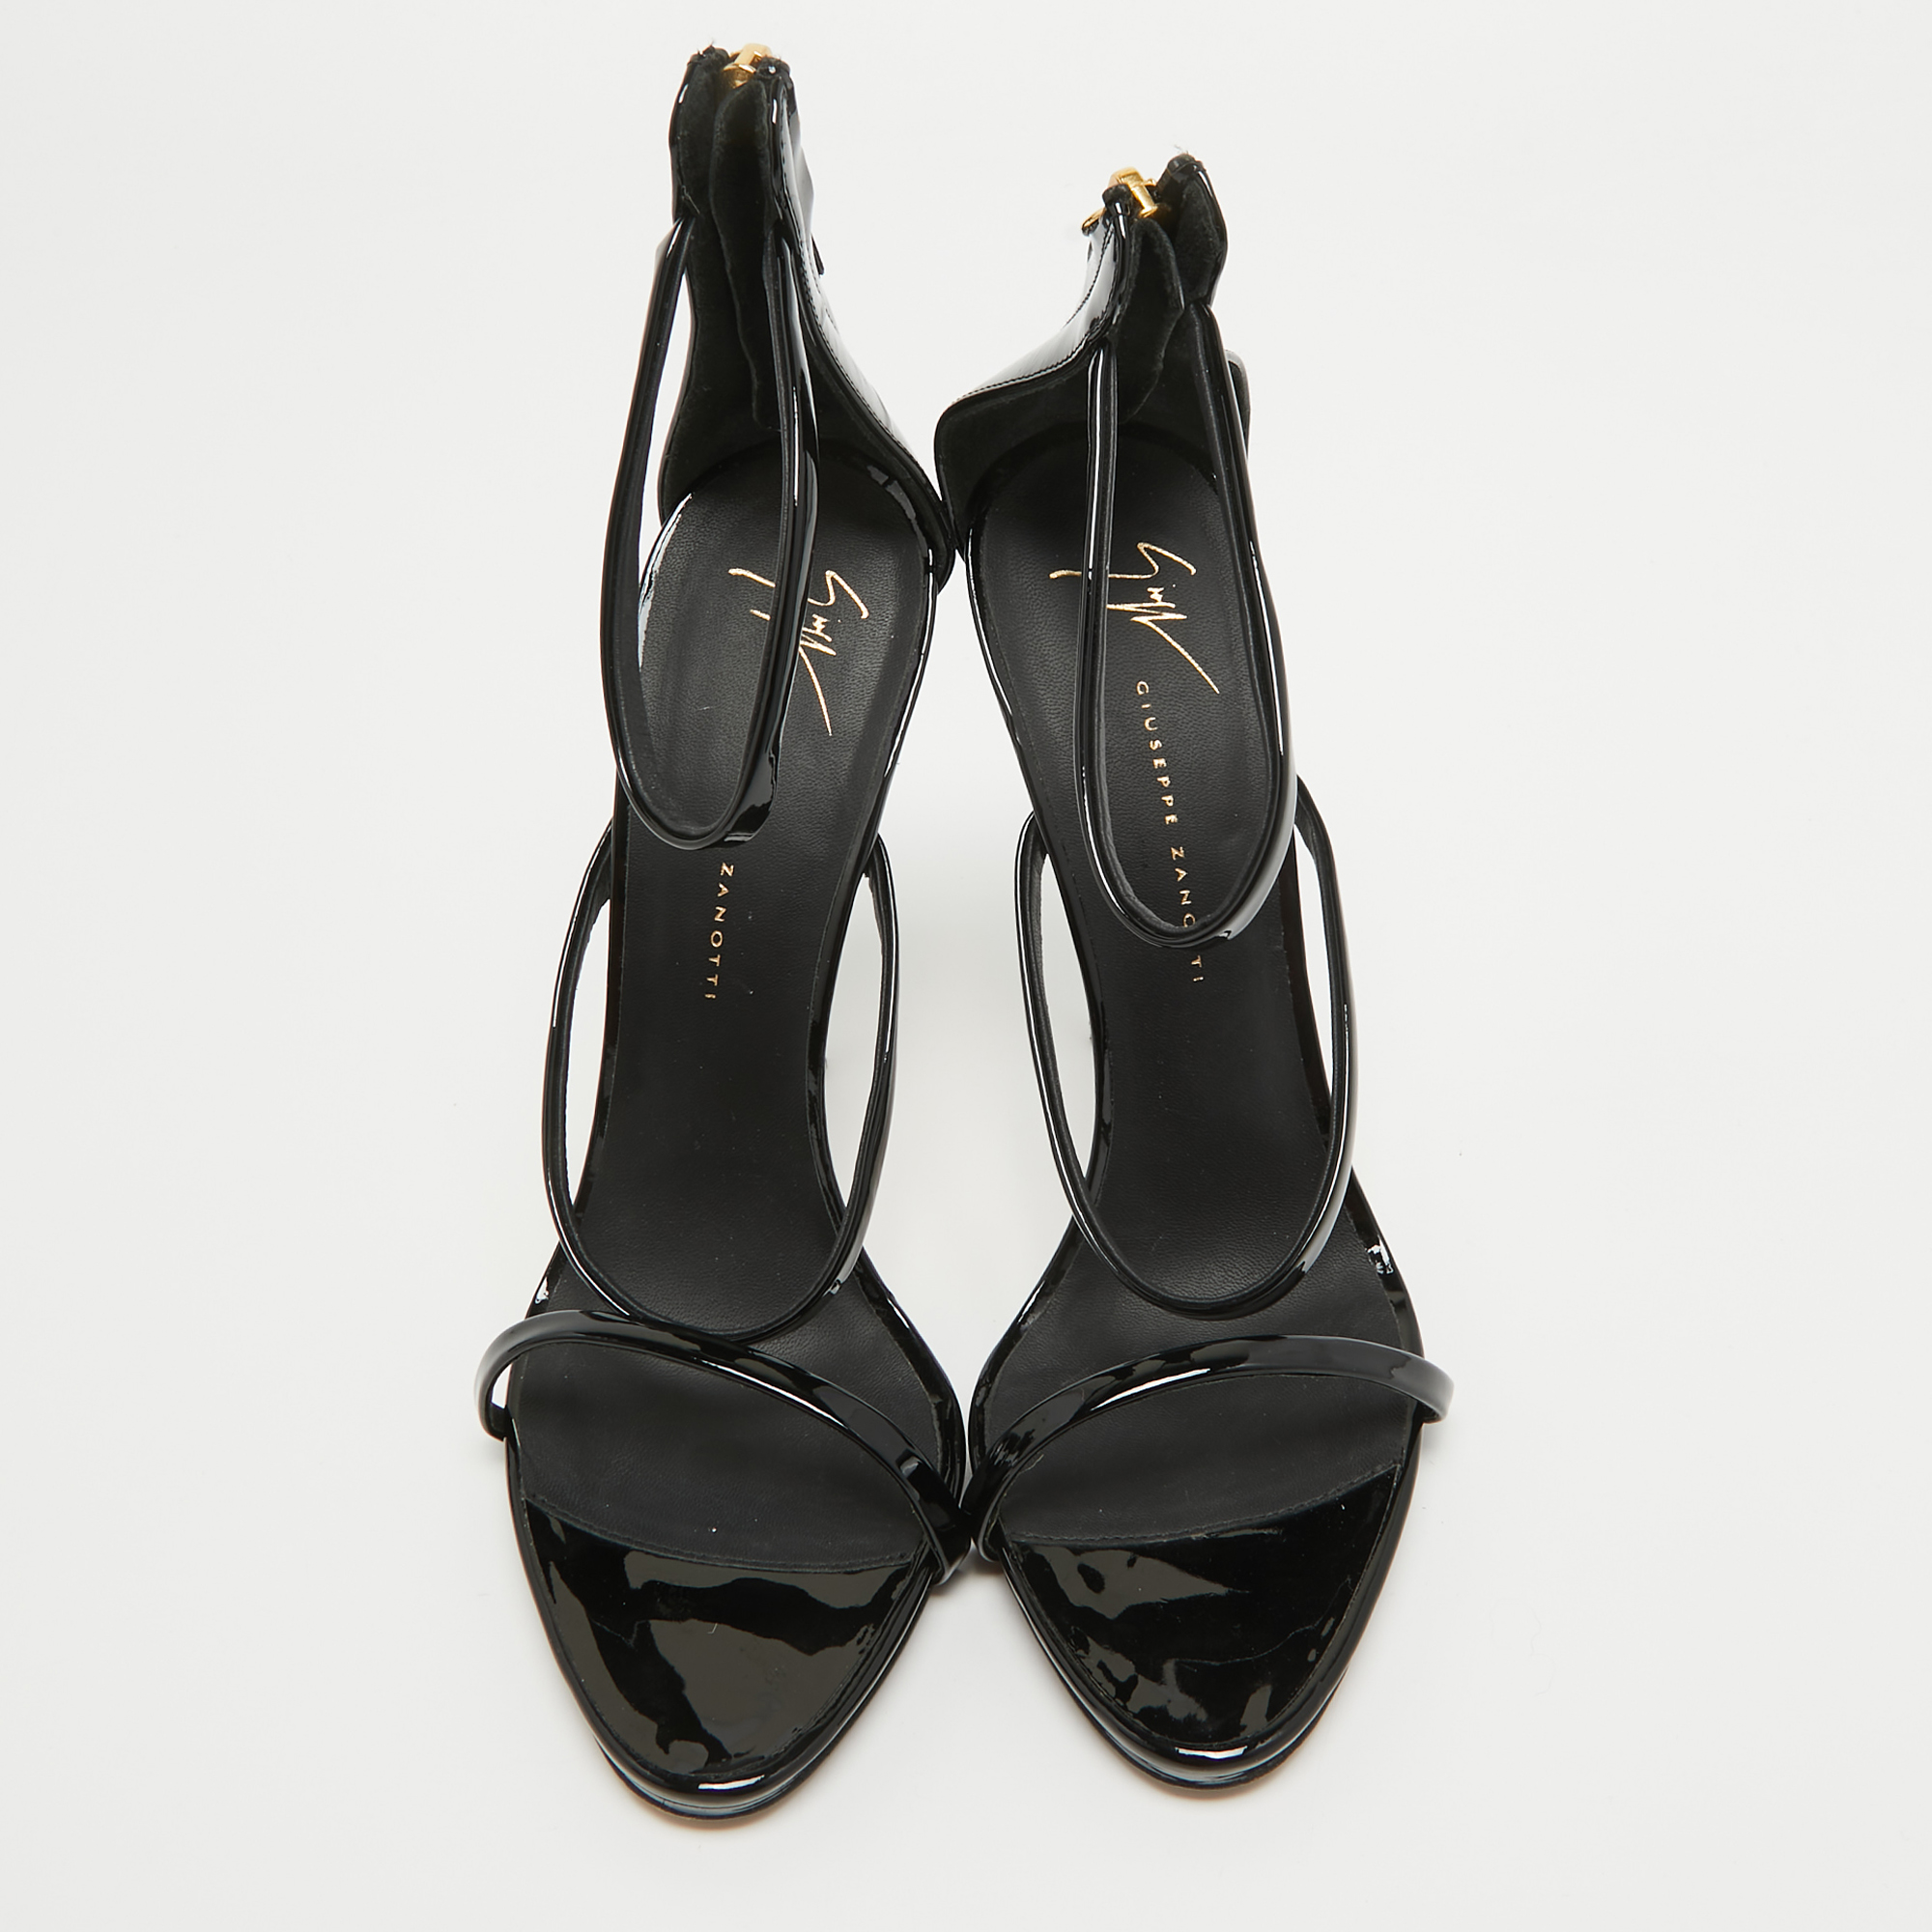 Giuseppe Zanotti Black Patent Leather Harmony Sandals Size 39